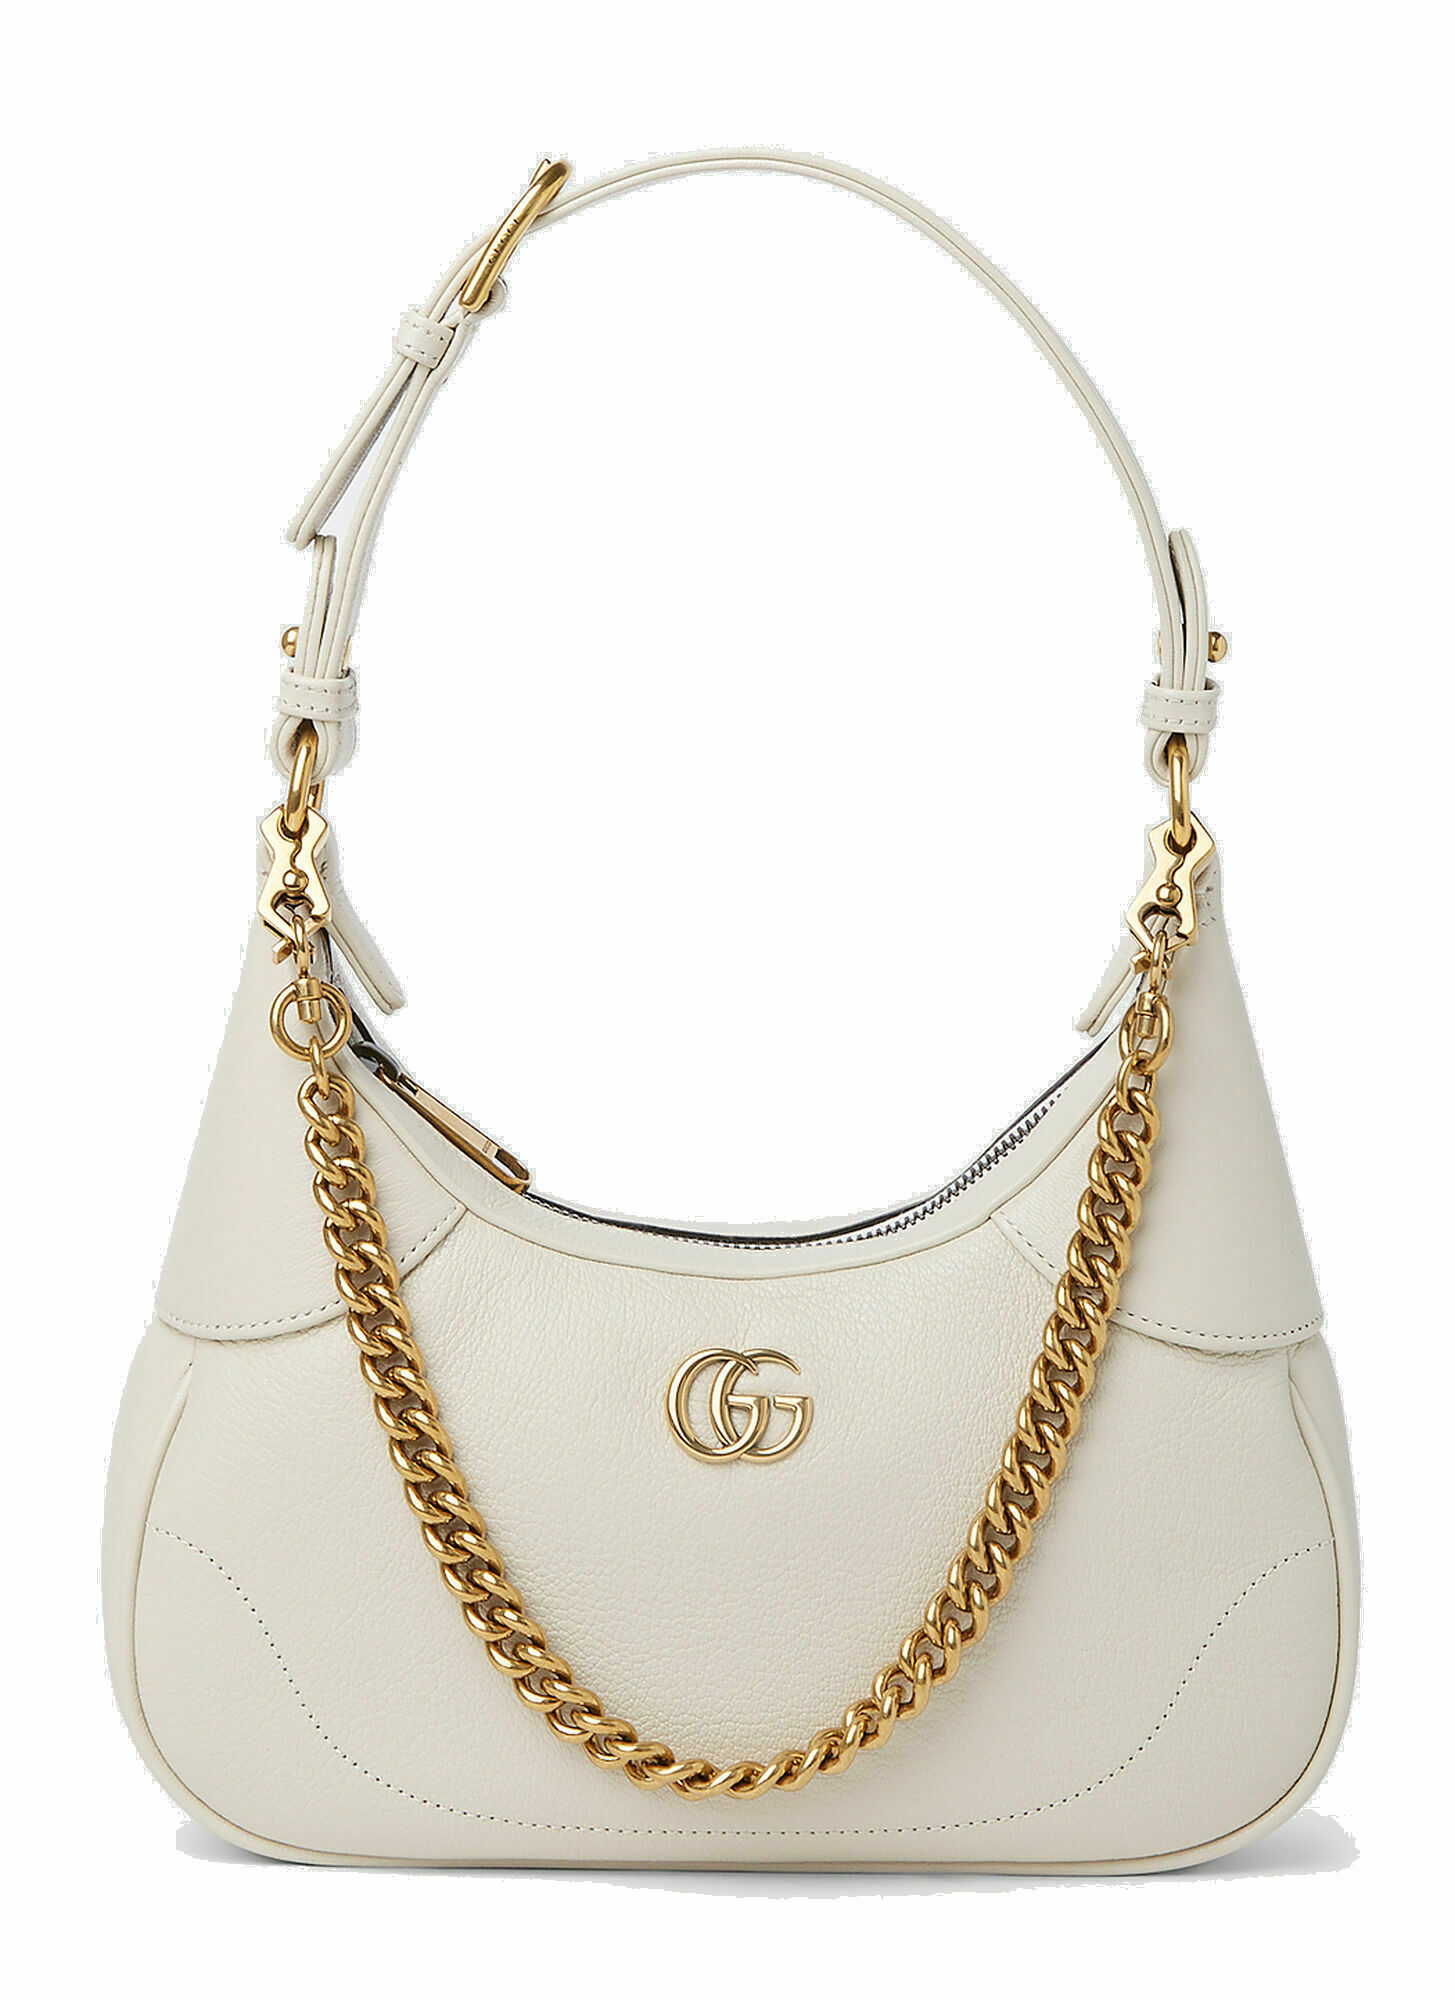 Gucci - Aphrodite Shoulder Bag in Cream Gucci